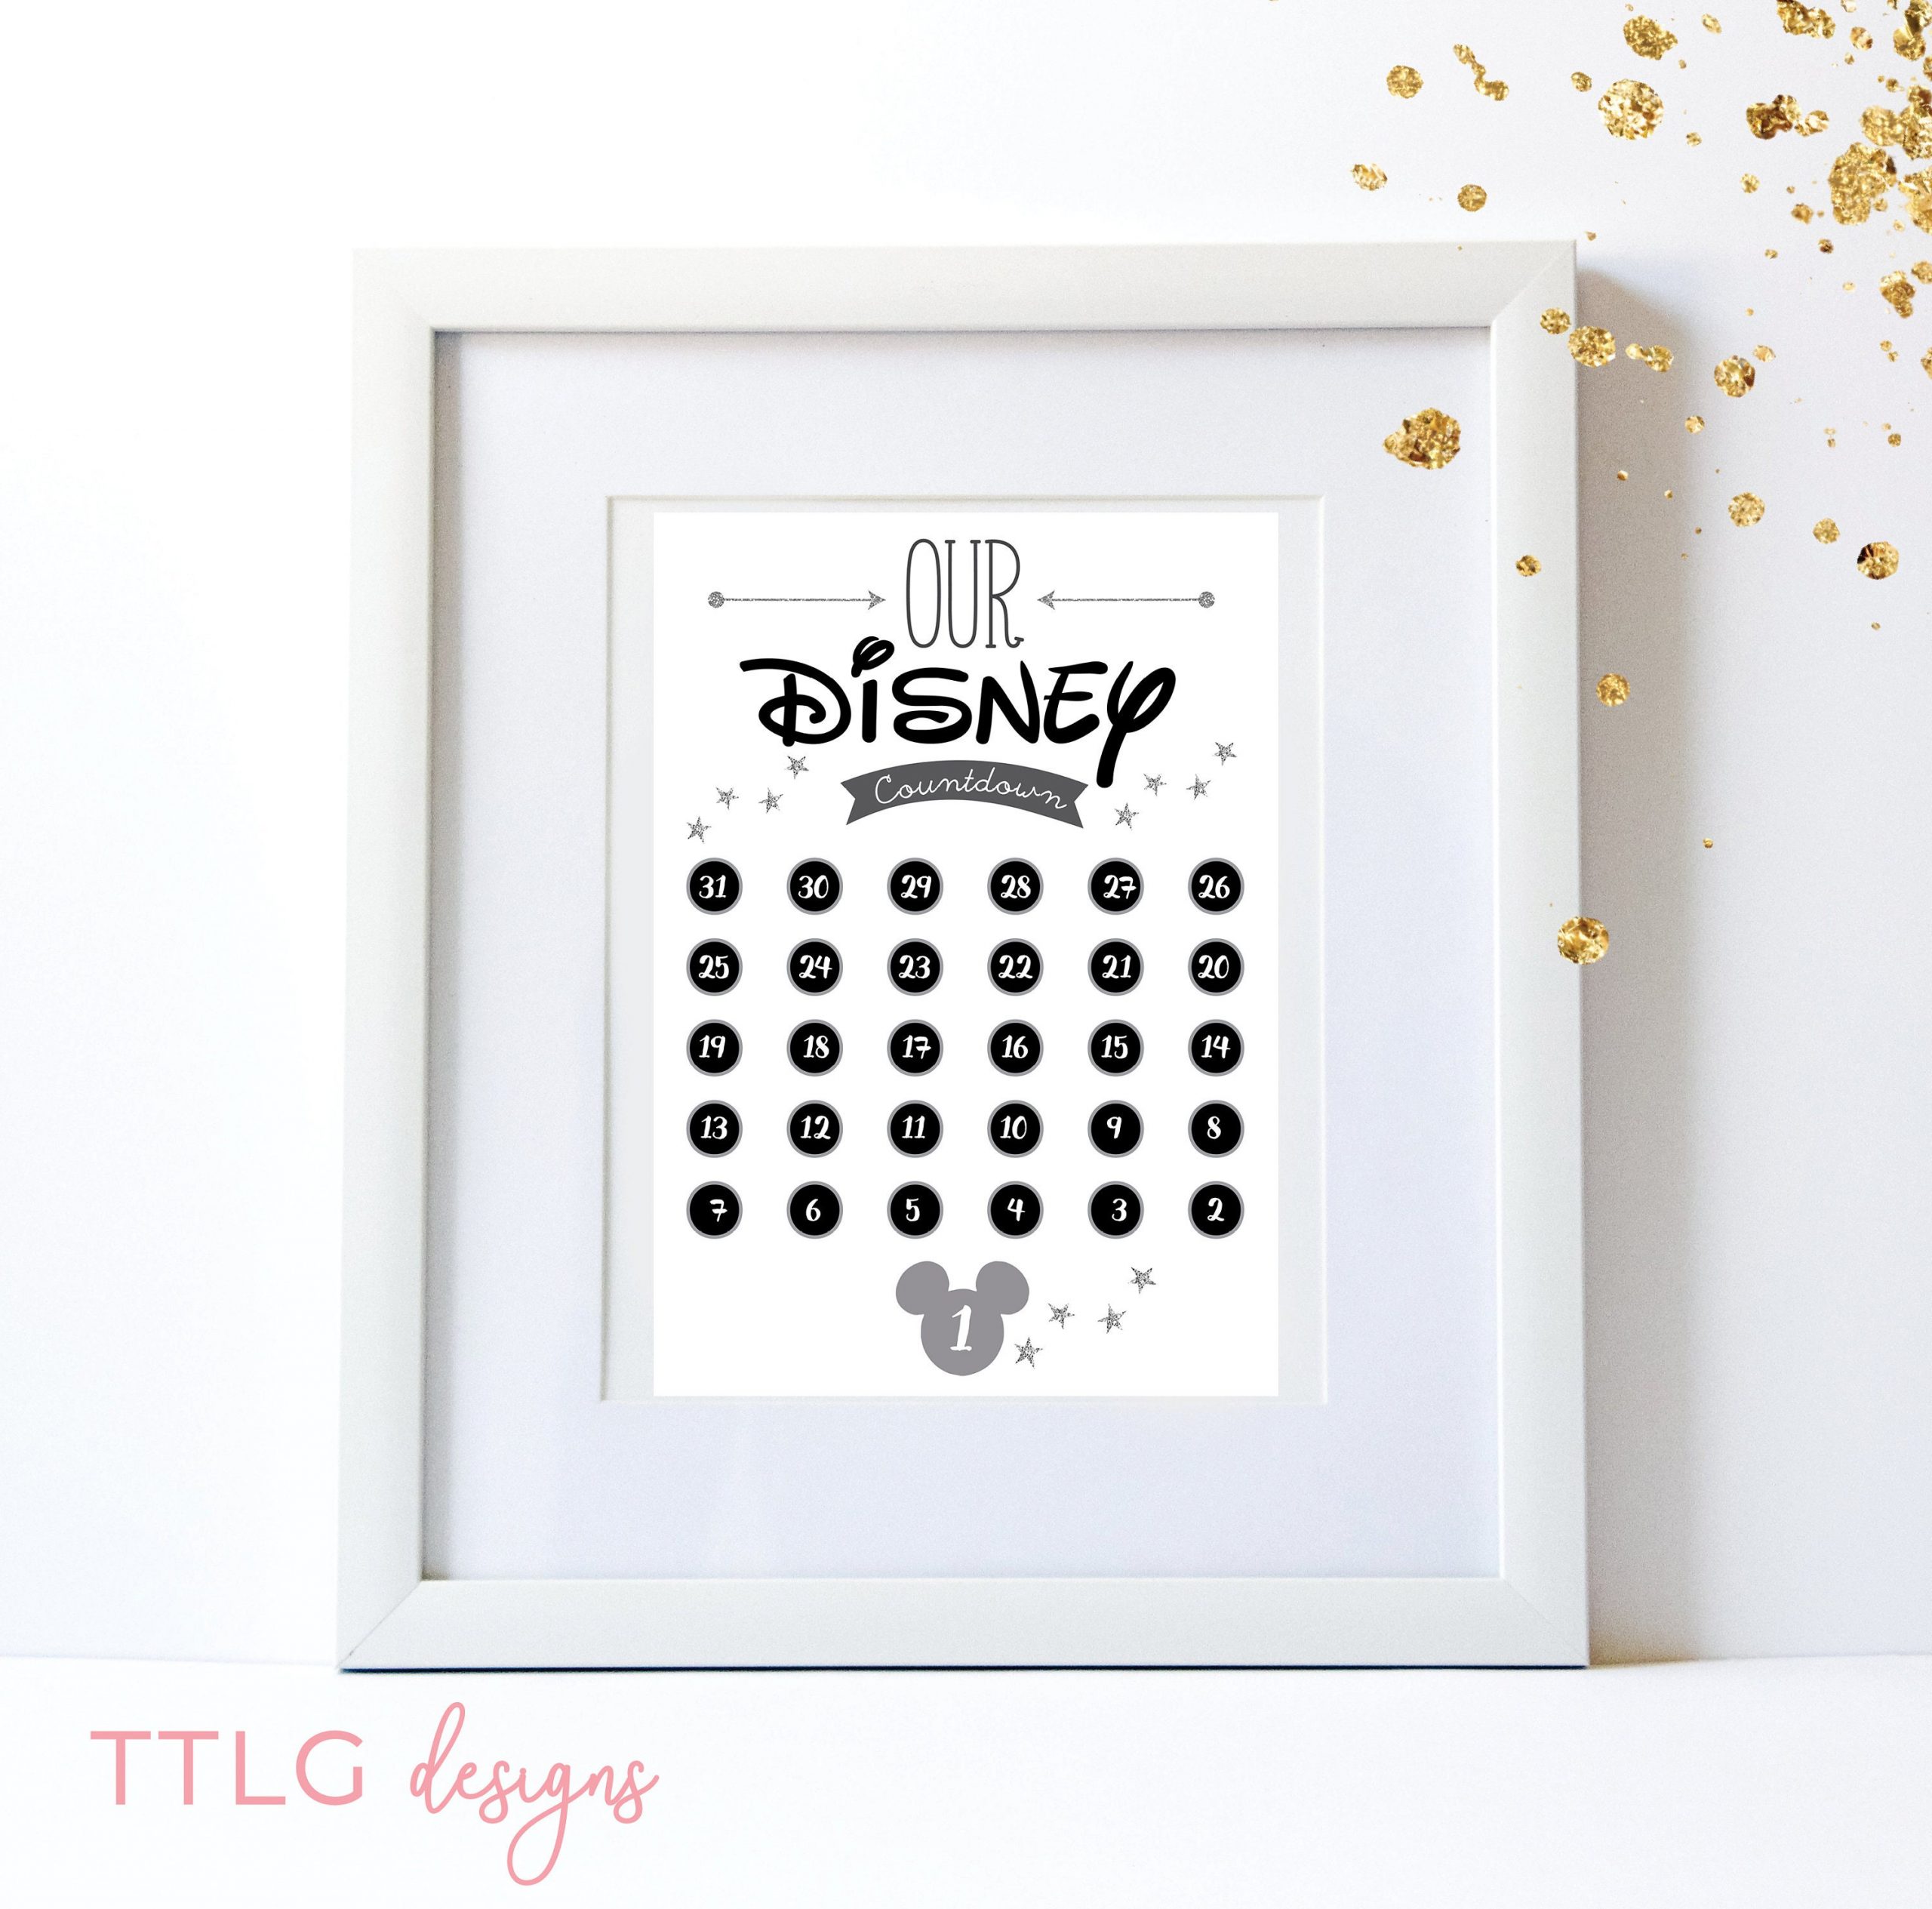 Printable Disney Countdown Calendar Sheet Mickey Mouse | Etsy Countdown To Disney Calendar Printable